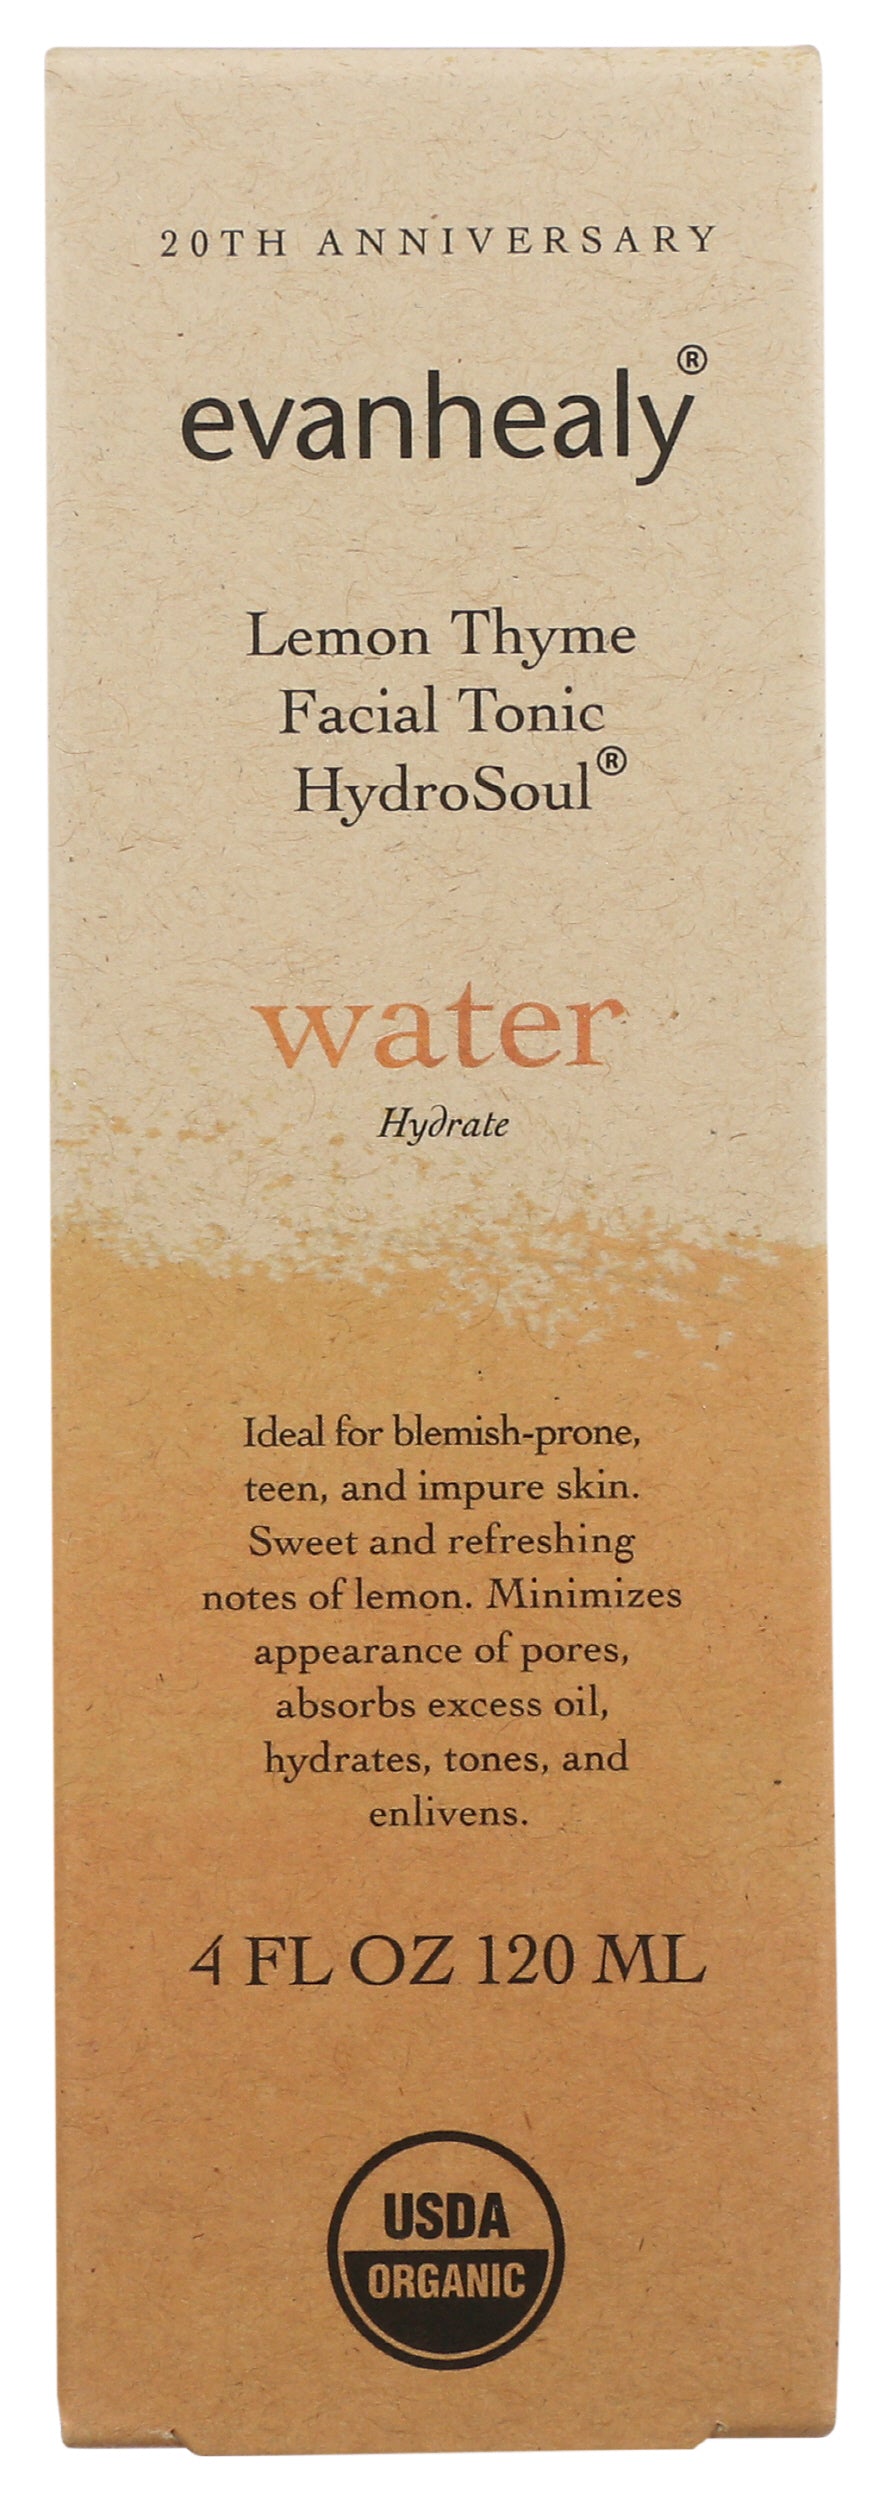 evanhealy Lemon Thyme Facial Tonic HydroSoul Water 4 Fl. Oz. Front